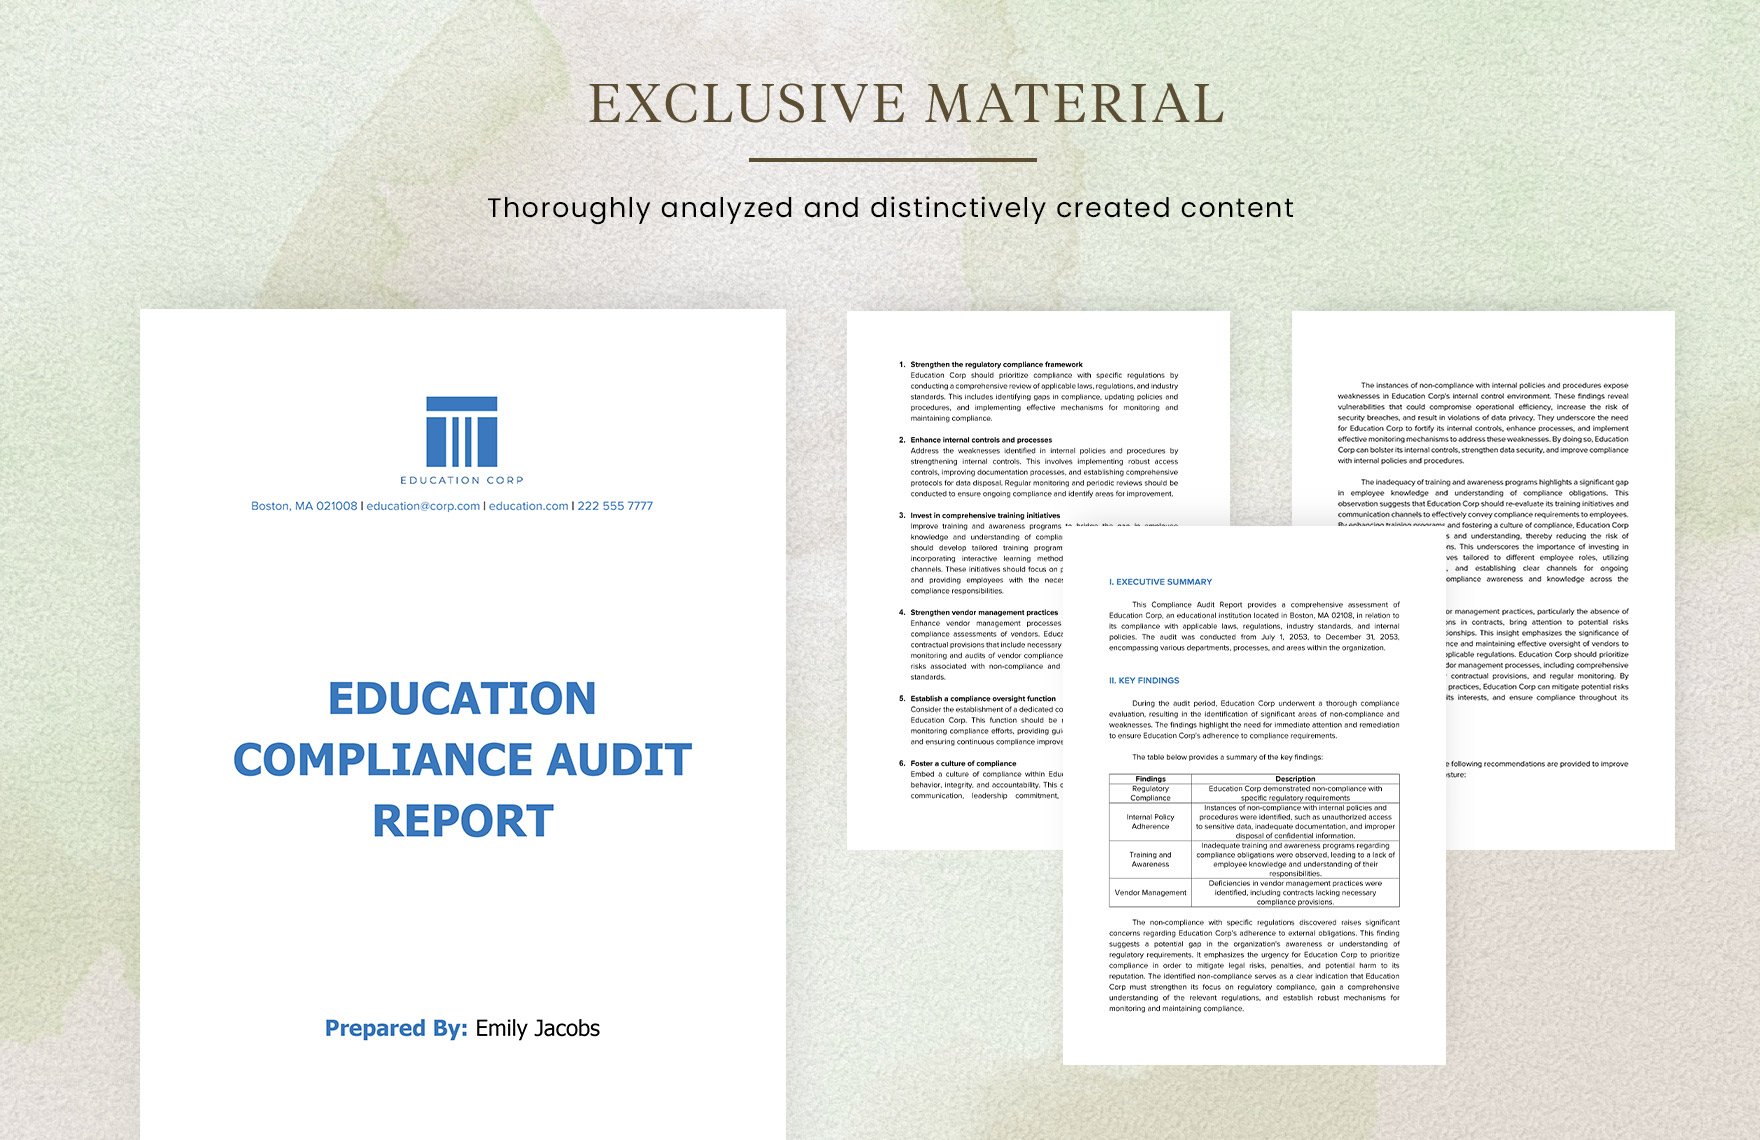 Education Compliance Audit Report Template